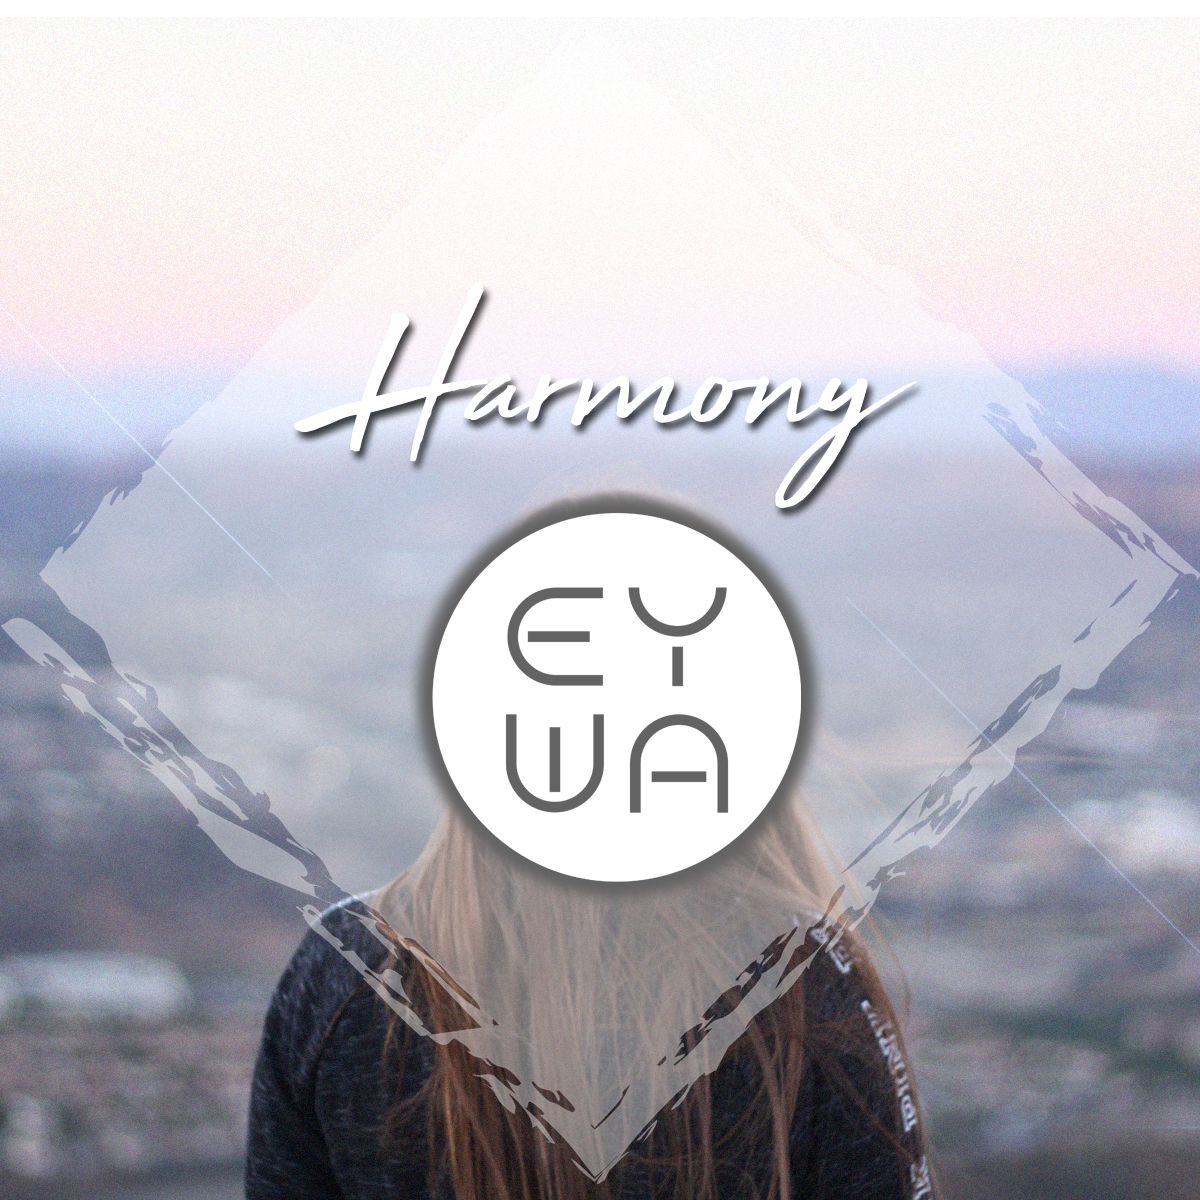 Download Eywa - Harmony // Downloadlink in description